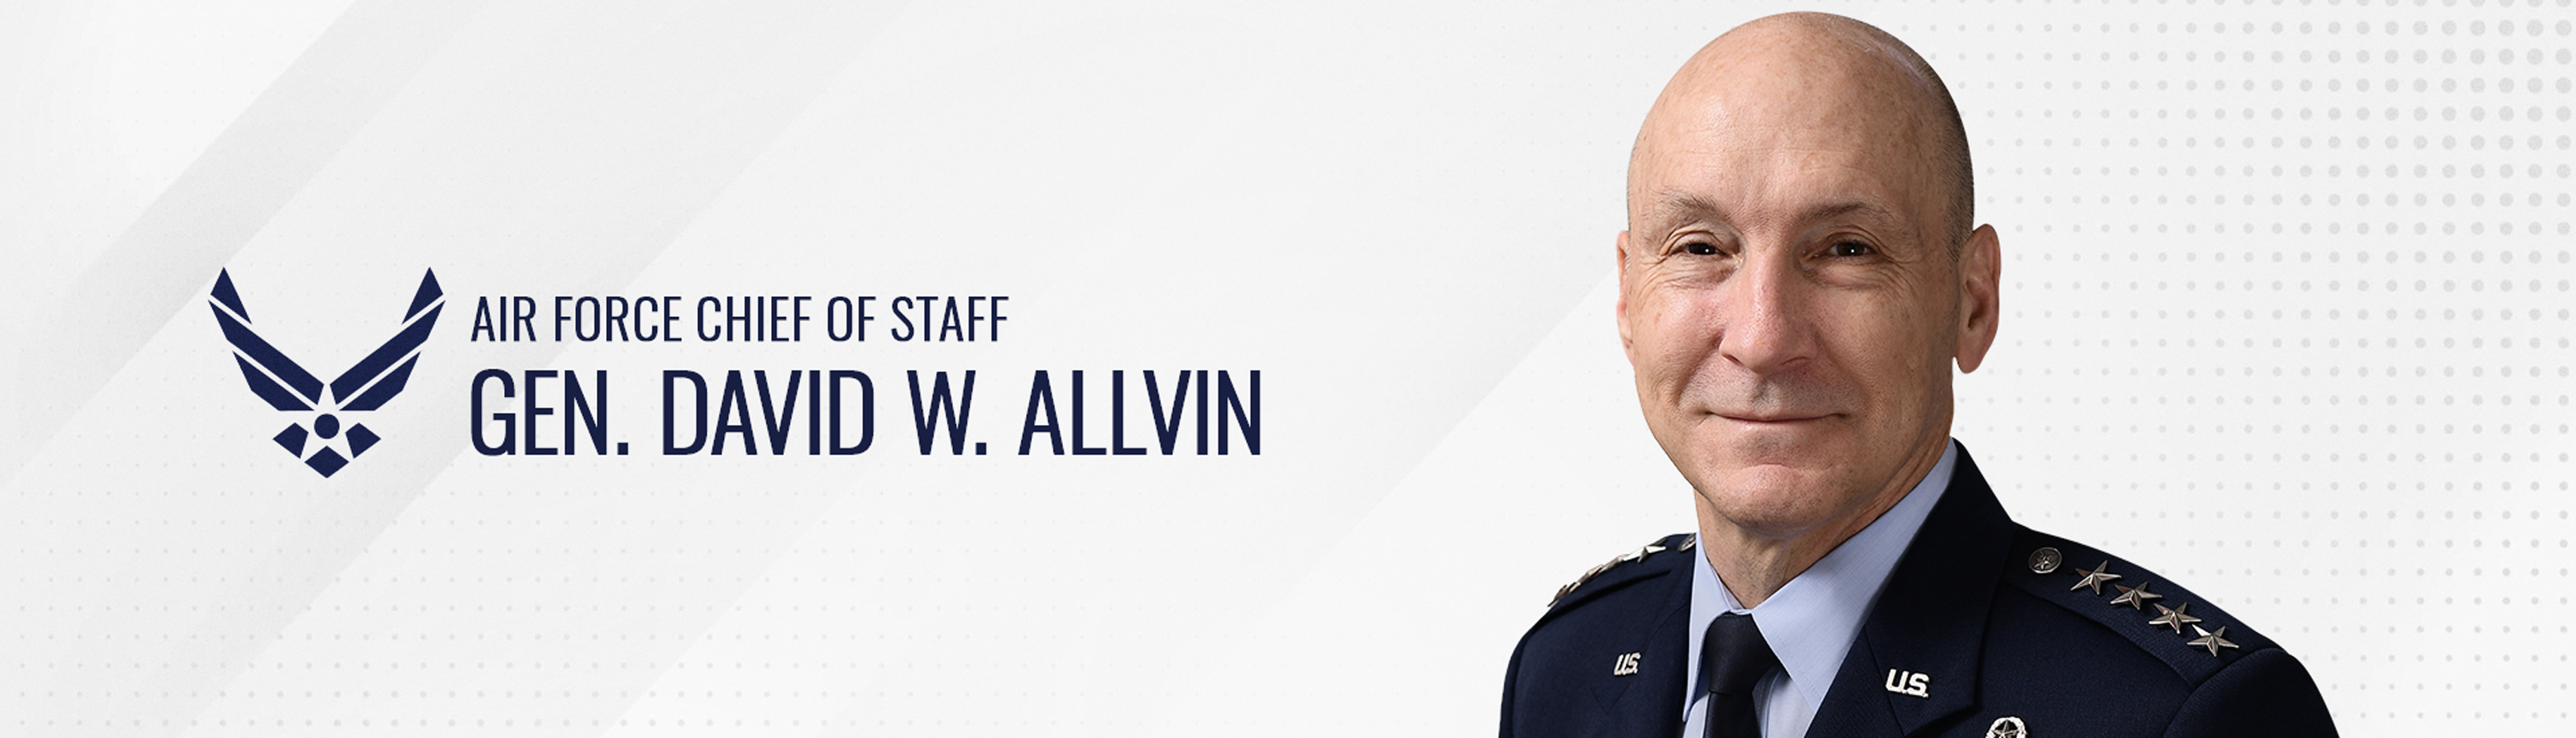 Gen. David W. Allvin, 23rd Air Force Chief of Staff